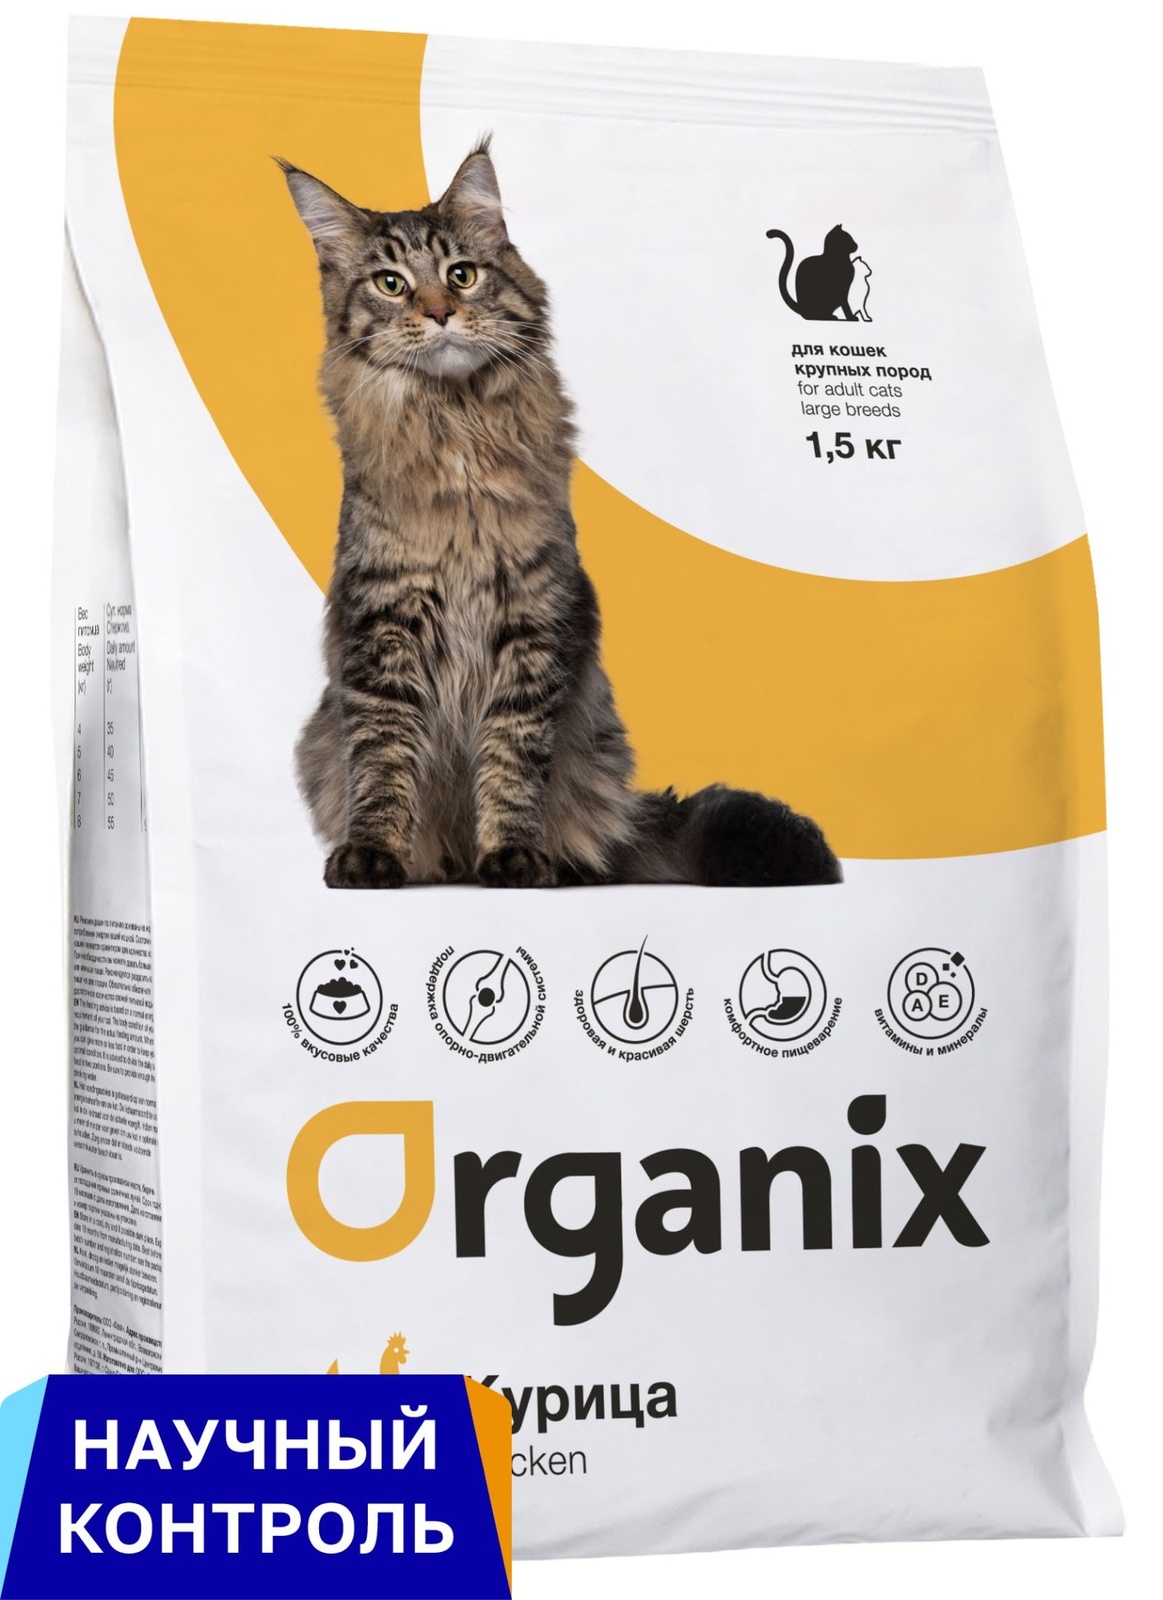 Organix  сухой корм для кошек крупных пород (7,5 кг) Organix  сухой корм для кошек крупных пород (7,5 кг) - фото 1